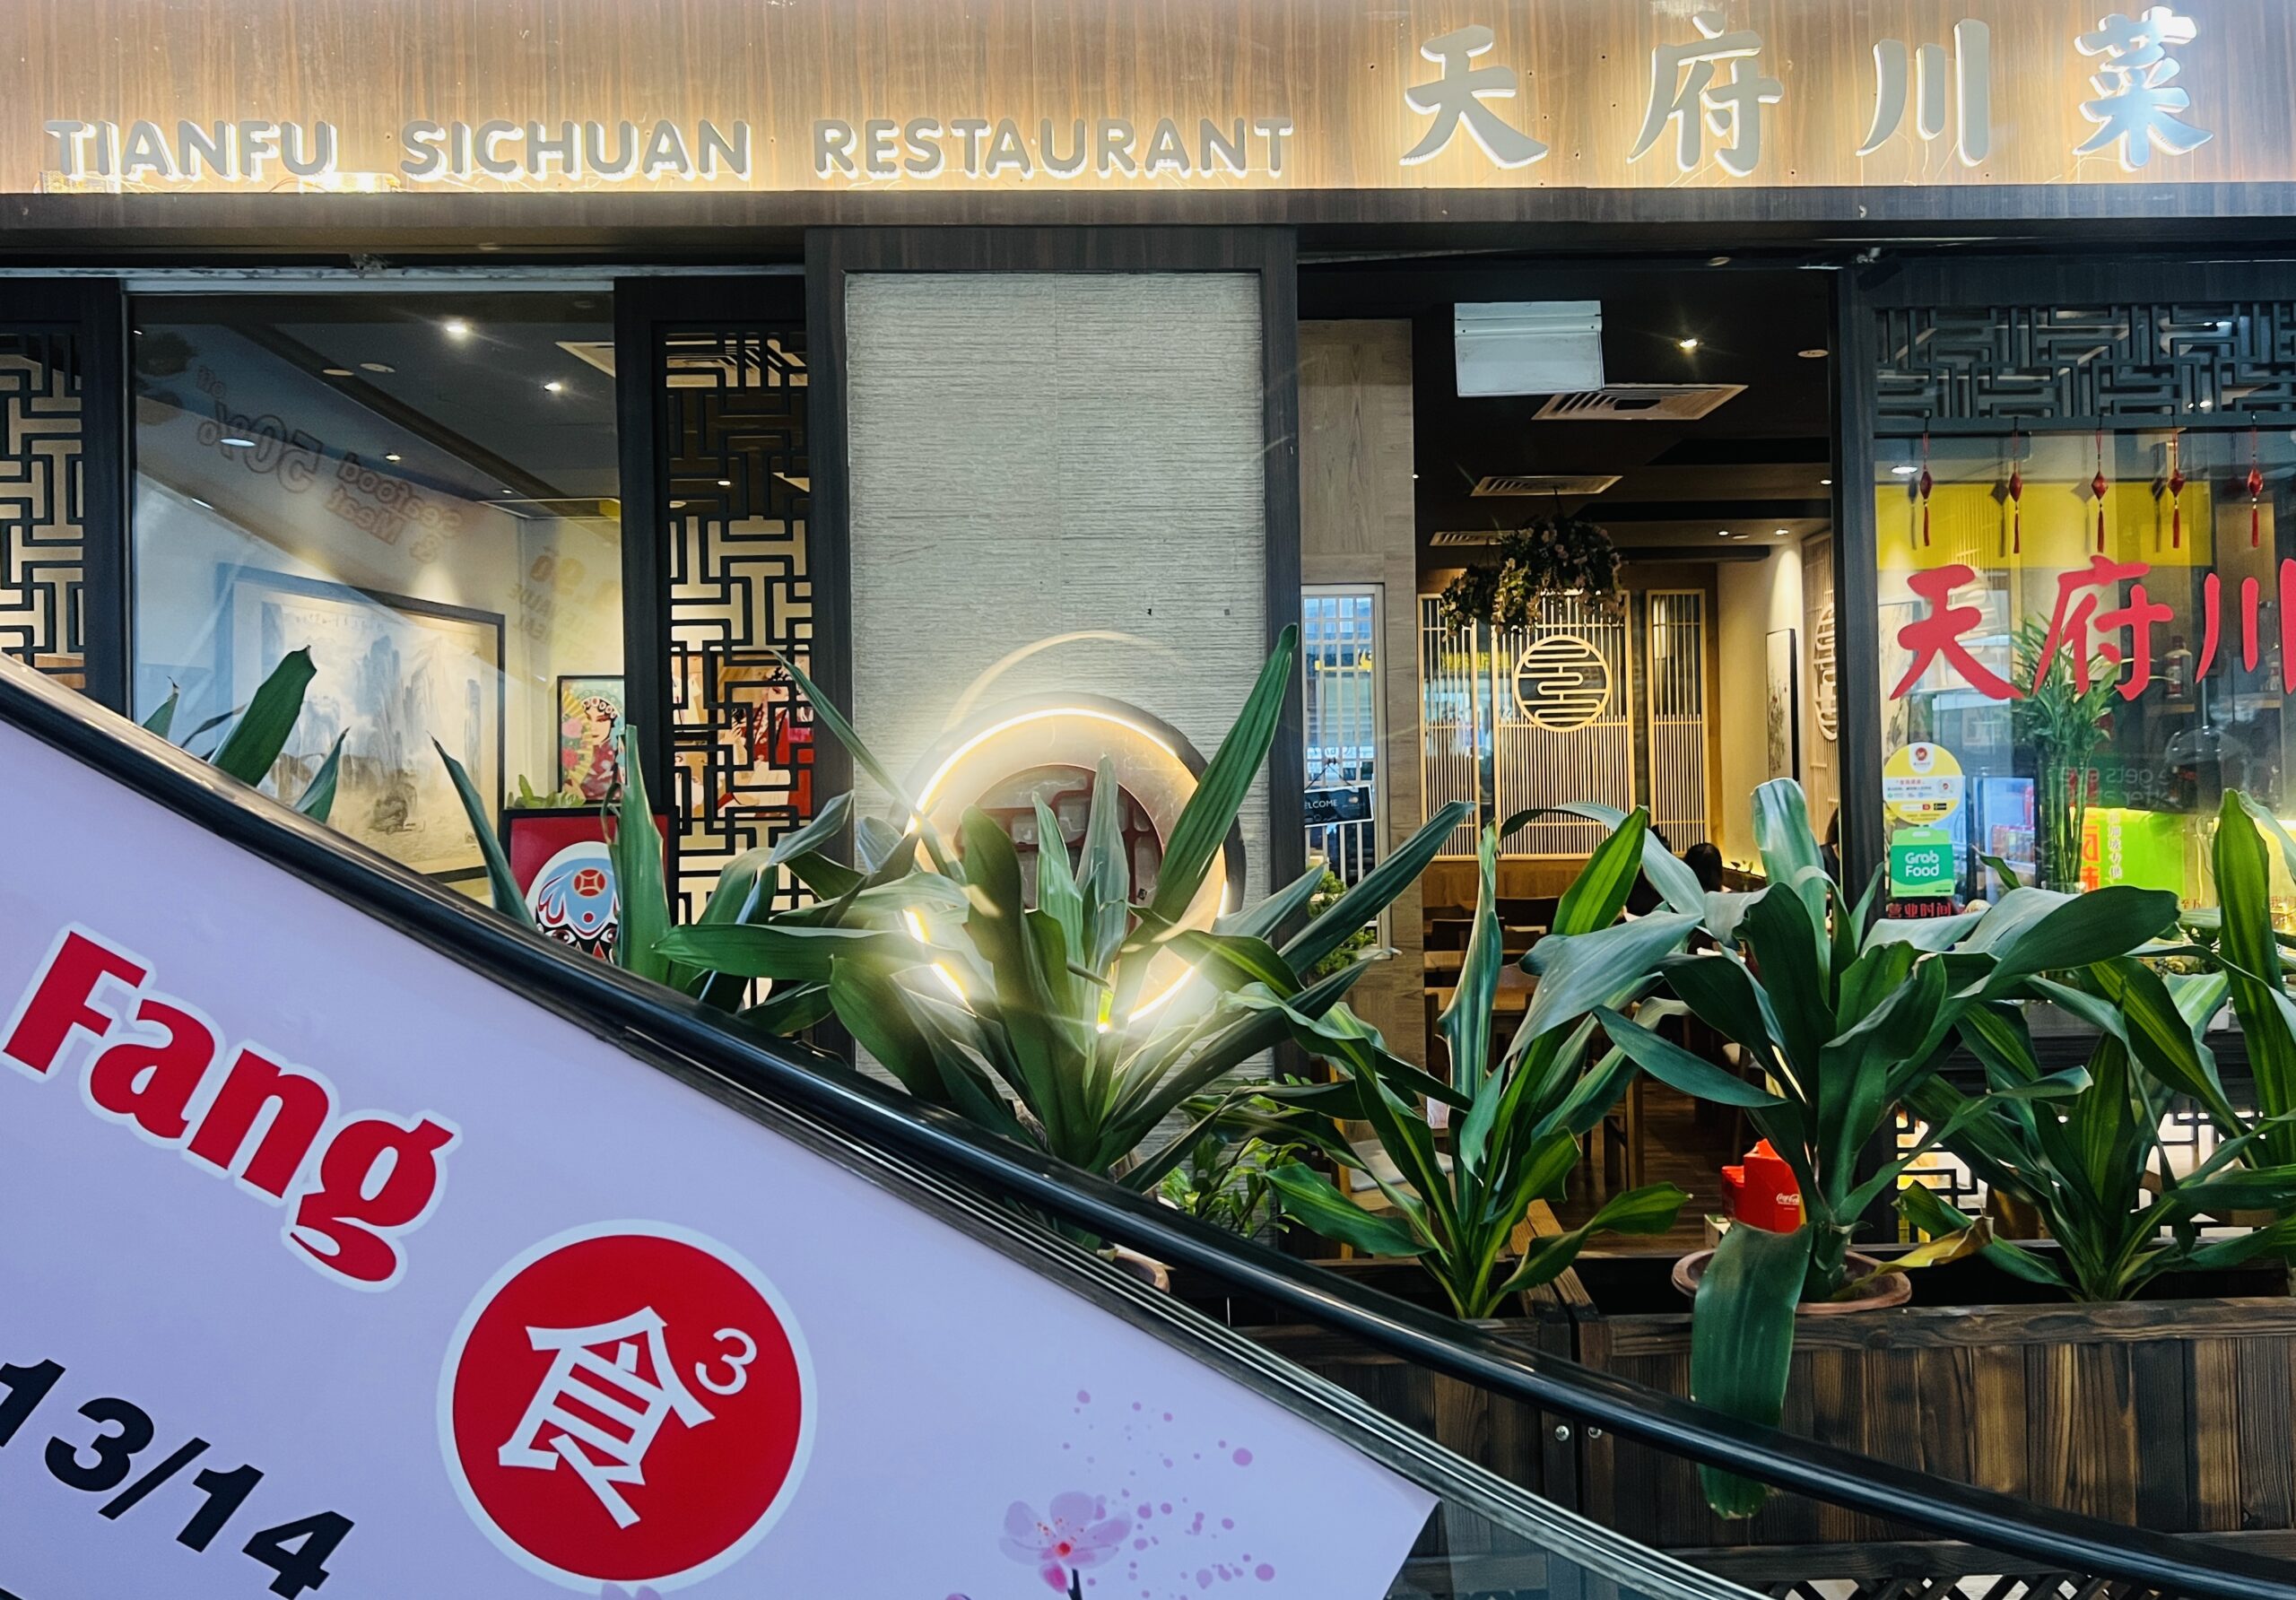 Tianfu Sichuan Restaurant - Restaurant Front